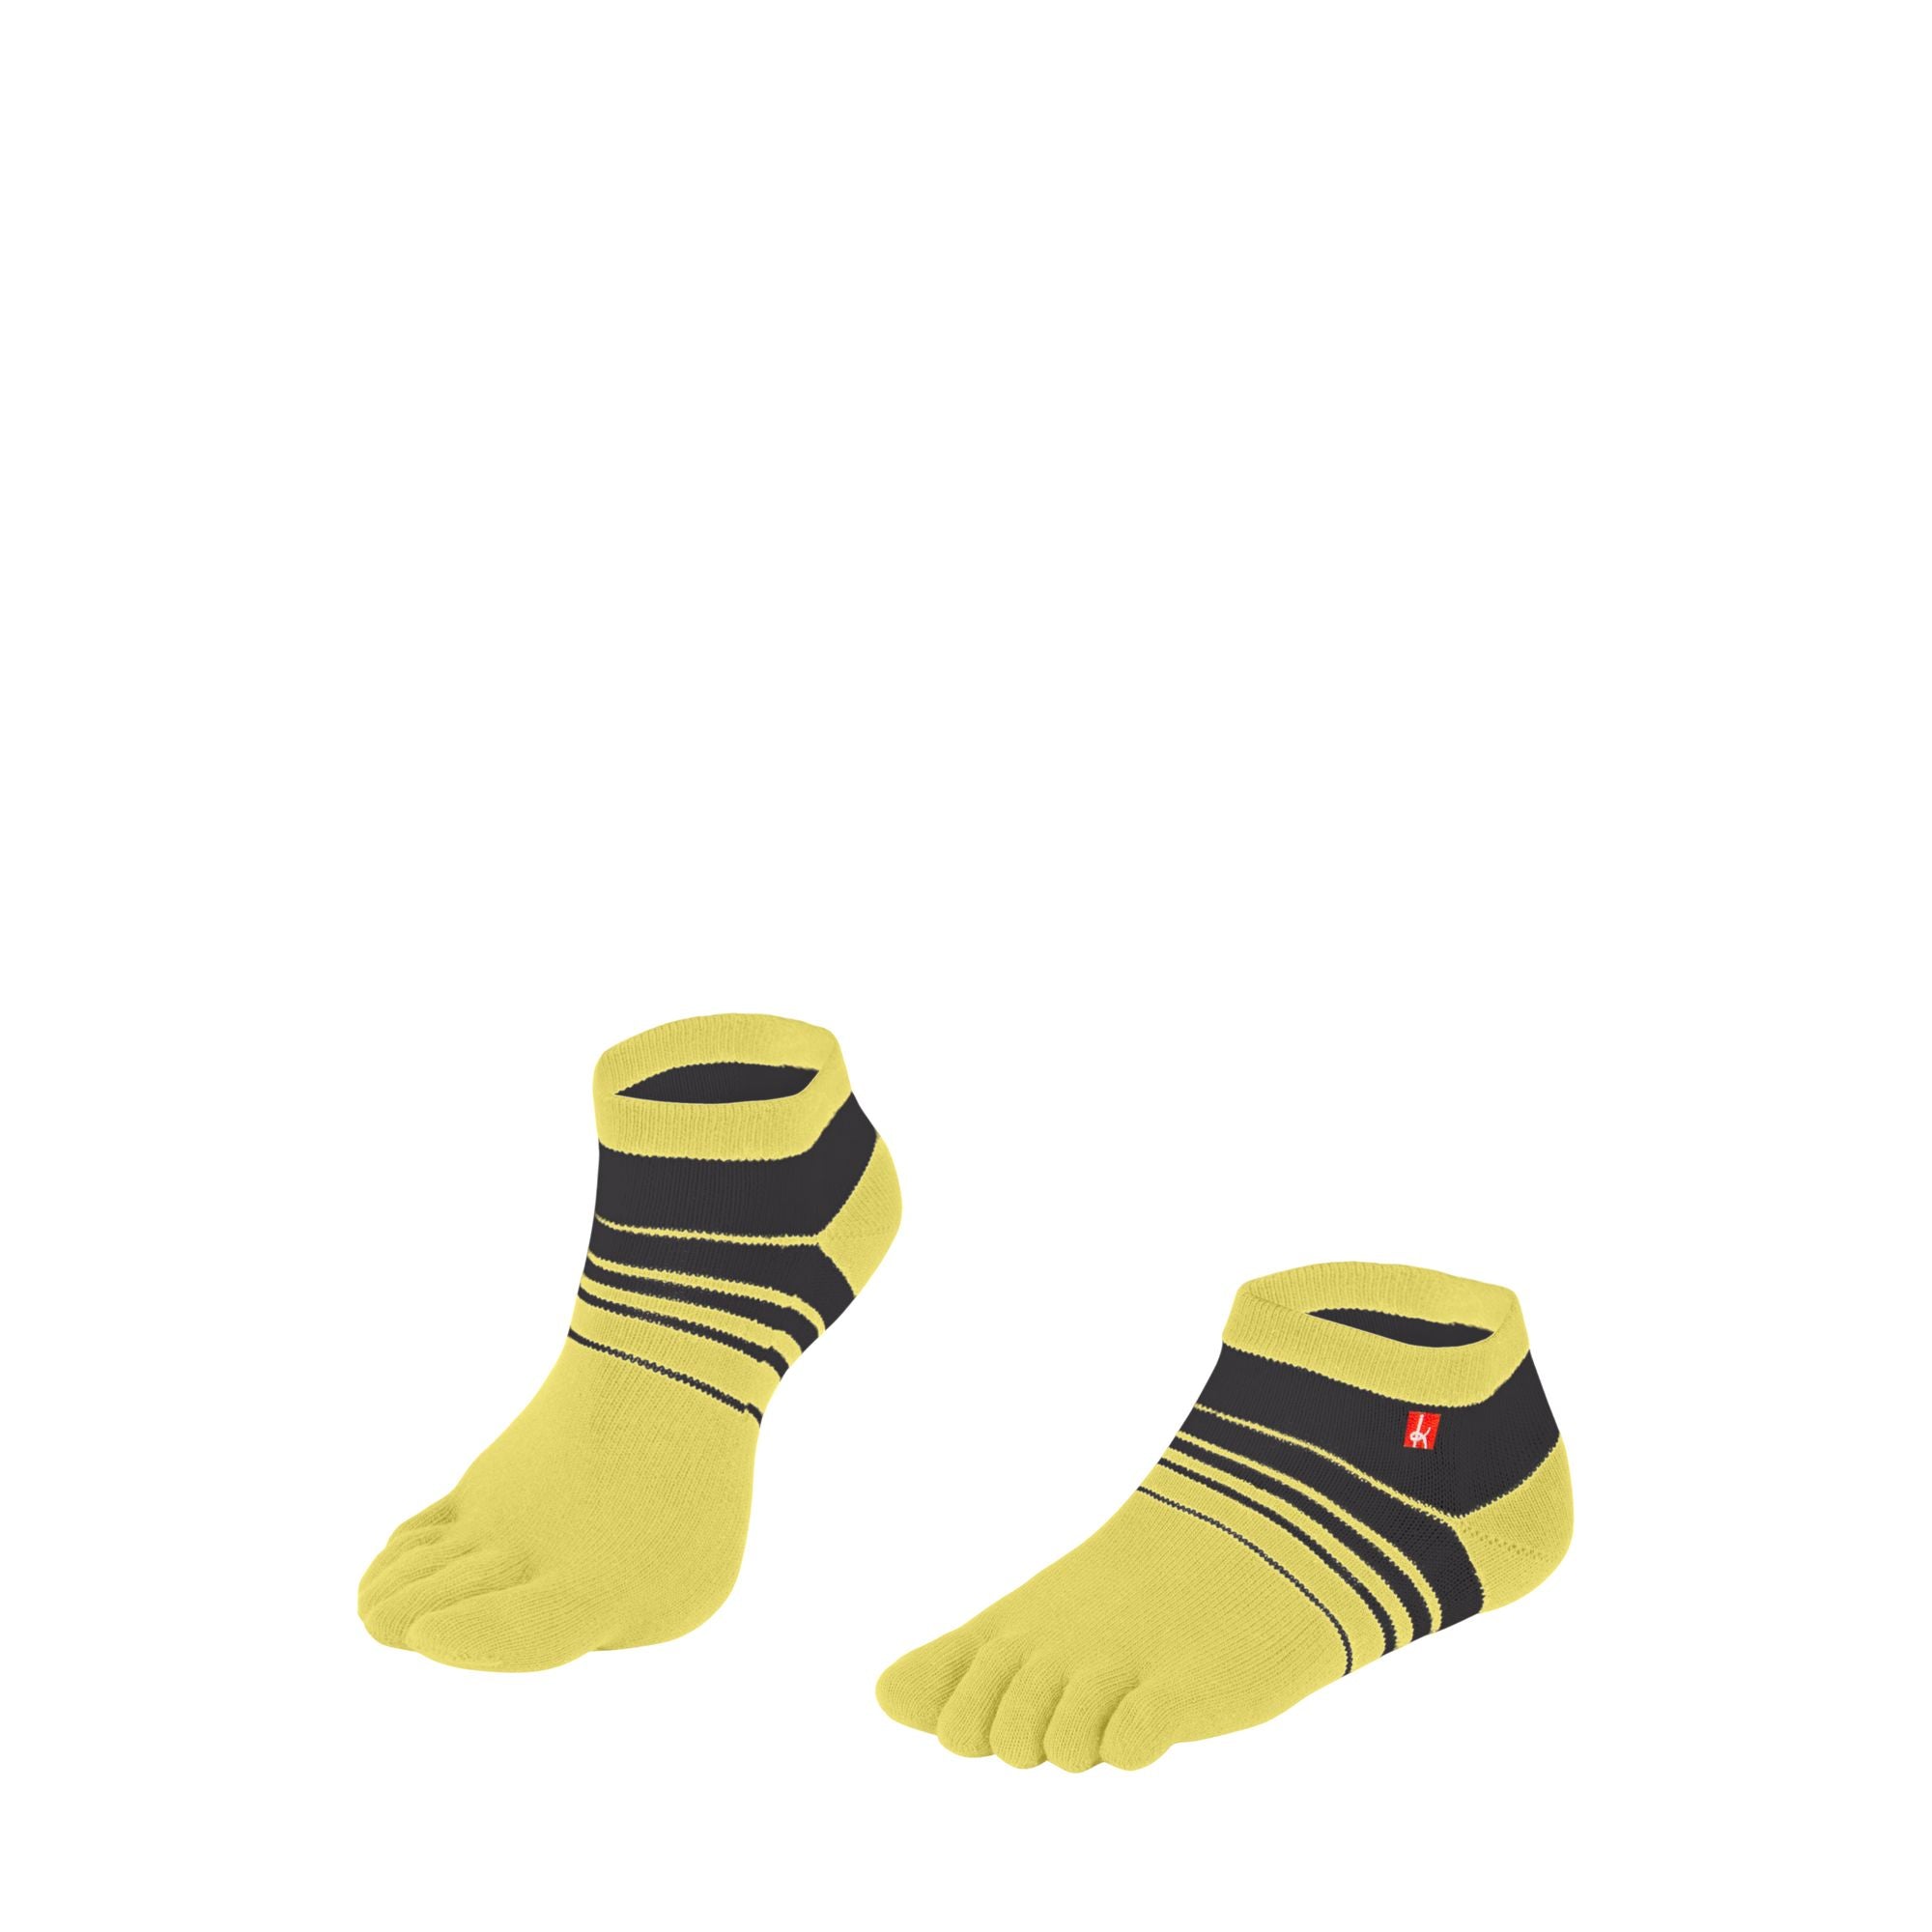 Knitido® Track & Trail Spins, sports toe socks, sneakers - Knitido®